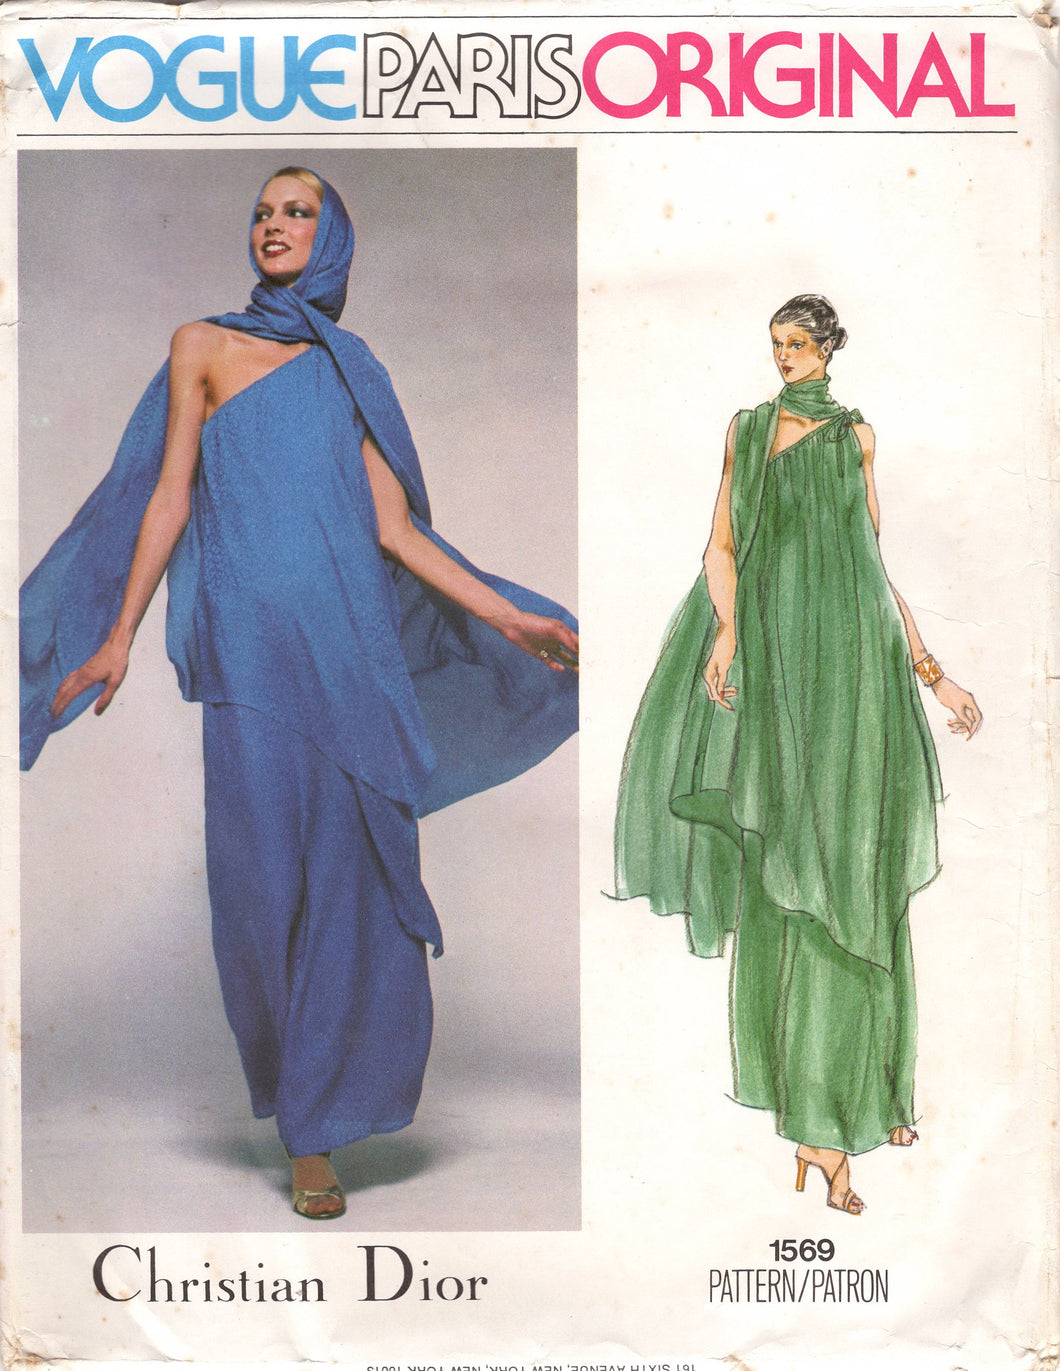 1970's Vogue Paris Original One Shoulder Dress and Stole Pattern - Christian Dior - Bust 36